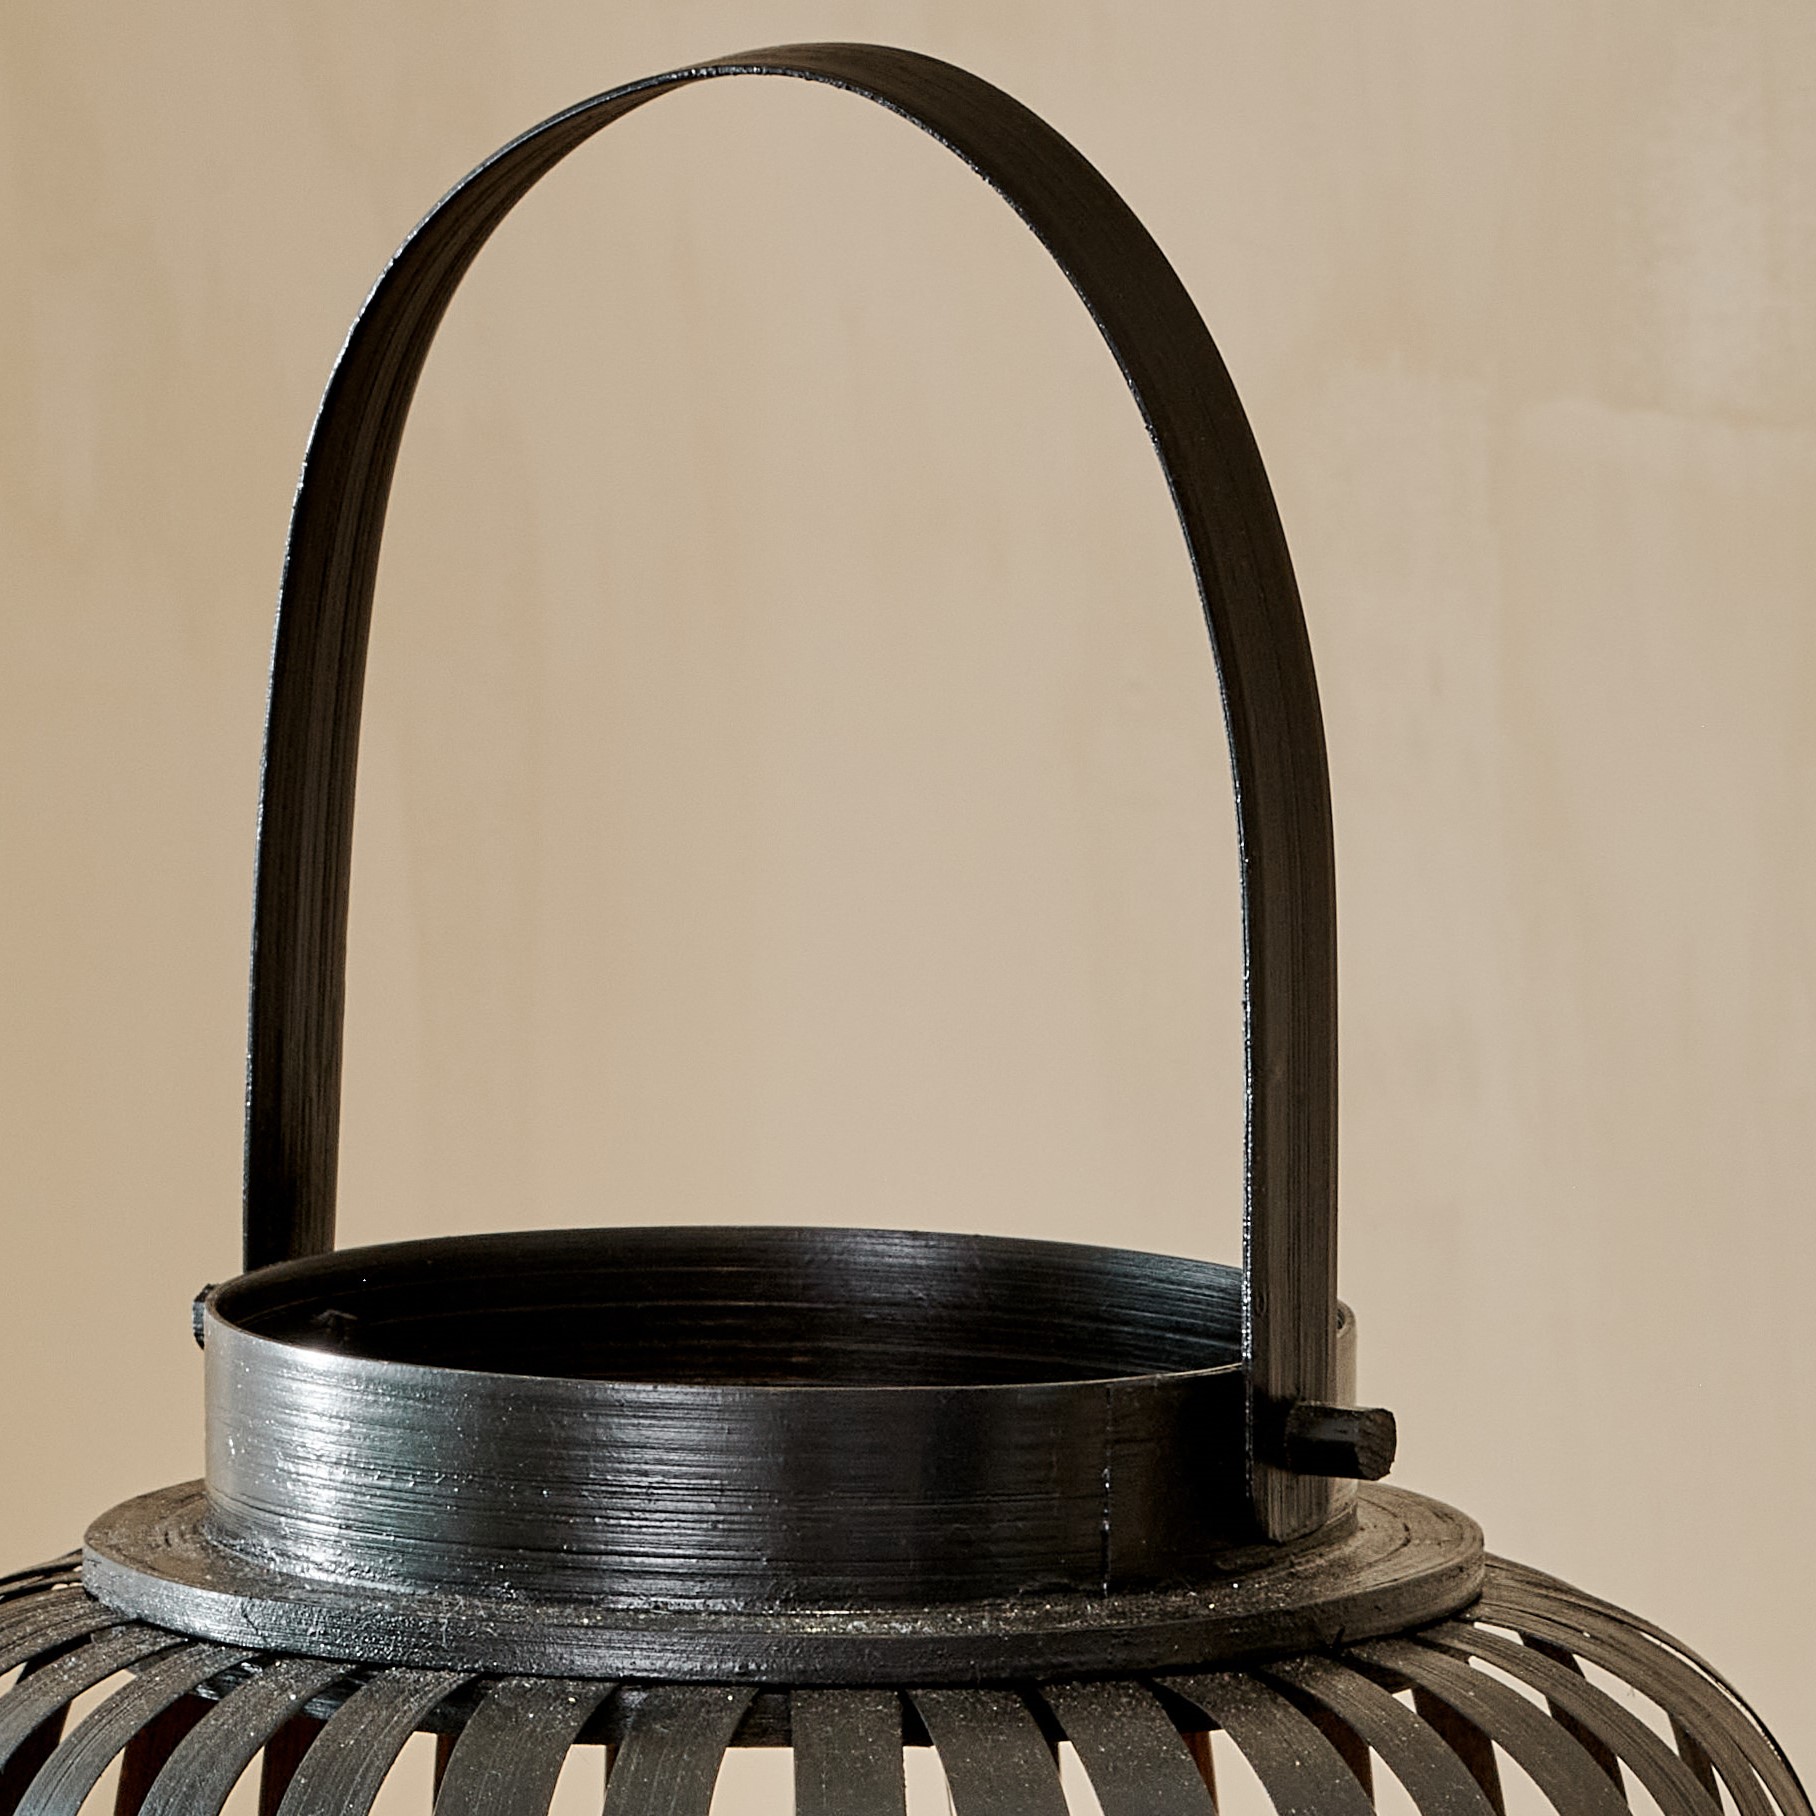 Close up of handle of black bamboo lantern